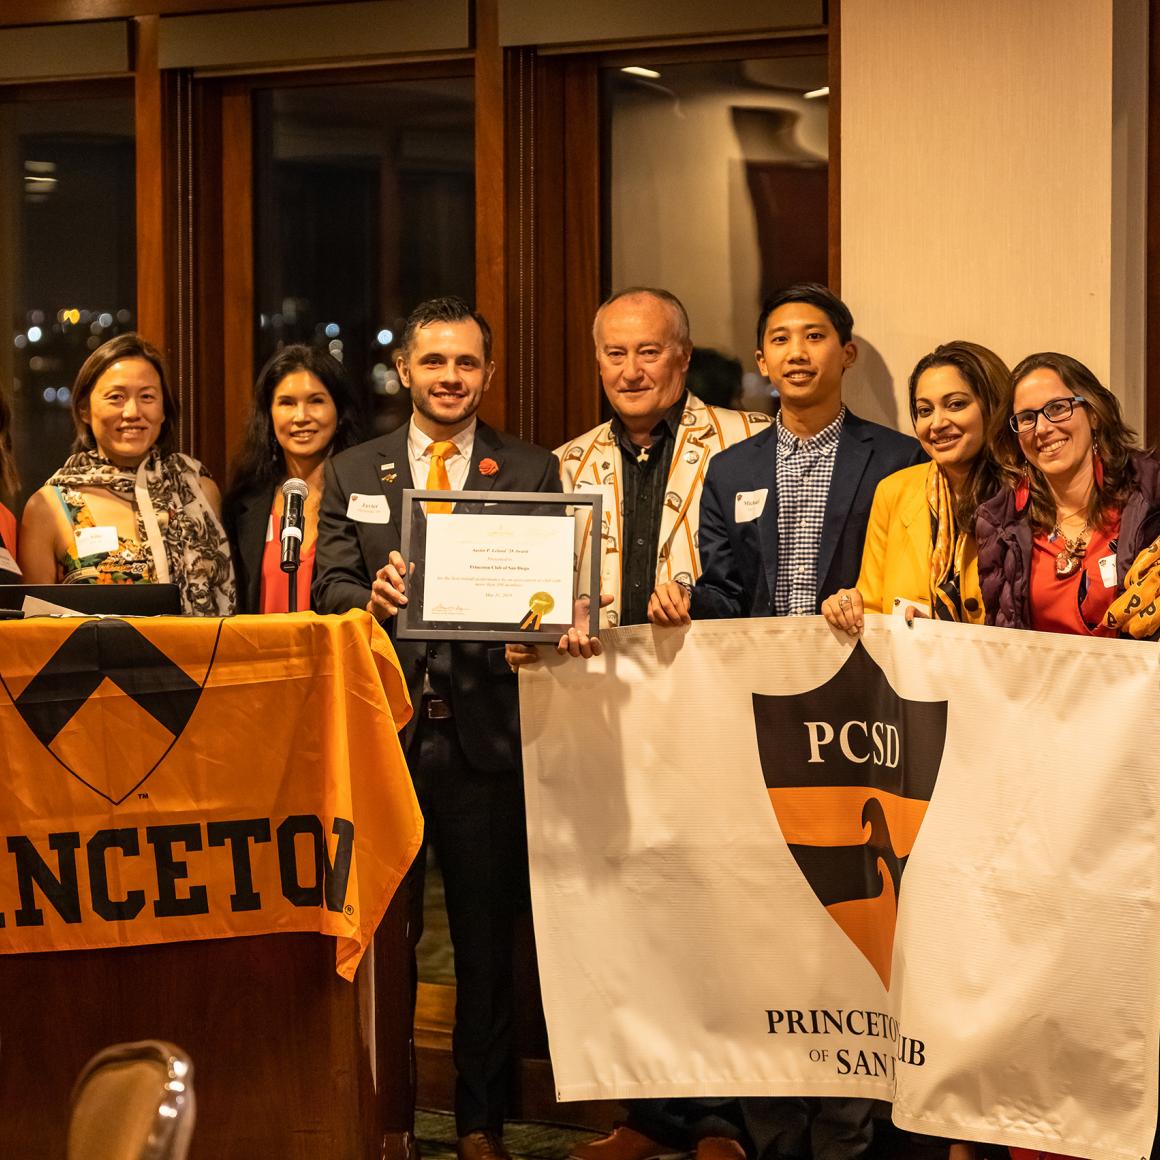 San Diego Princeton Club Award celebration